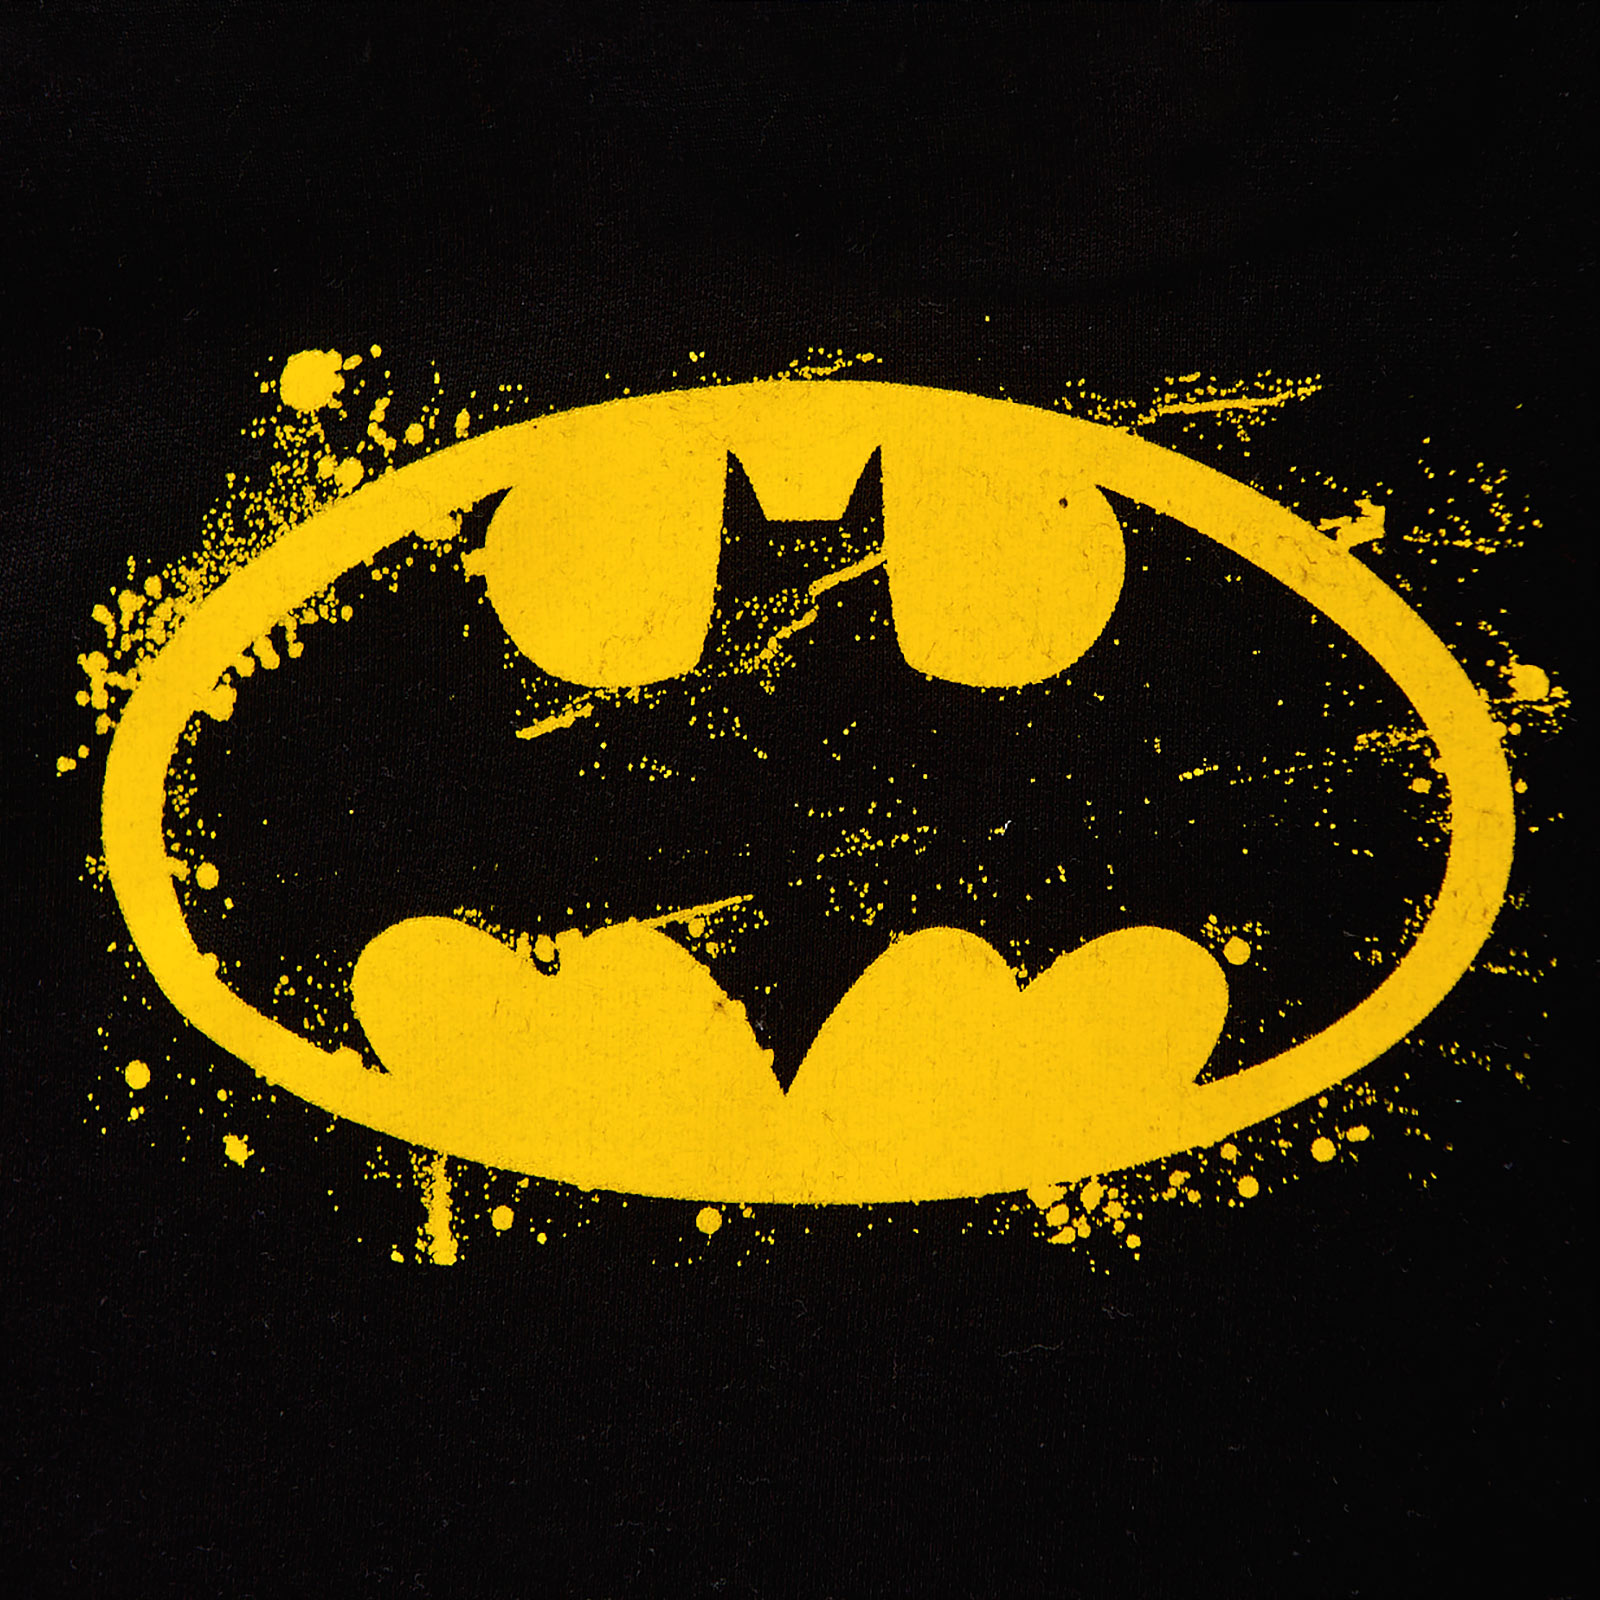 Batman - Logo Kinder Hoodie schwarz